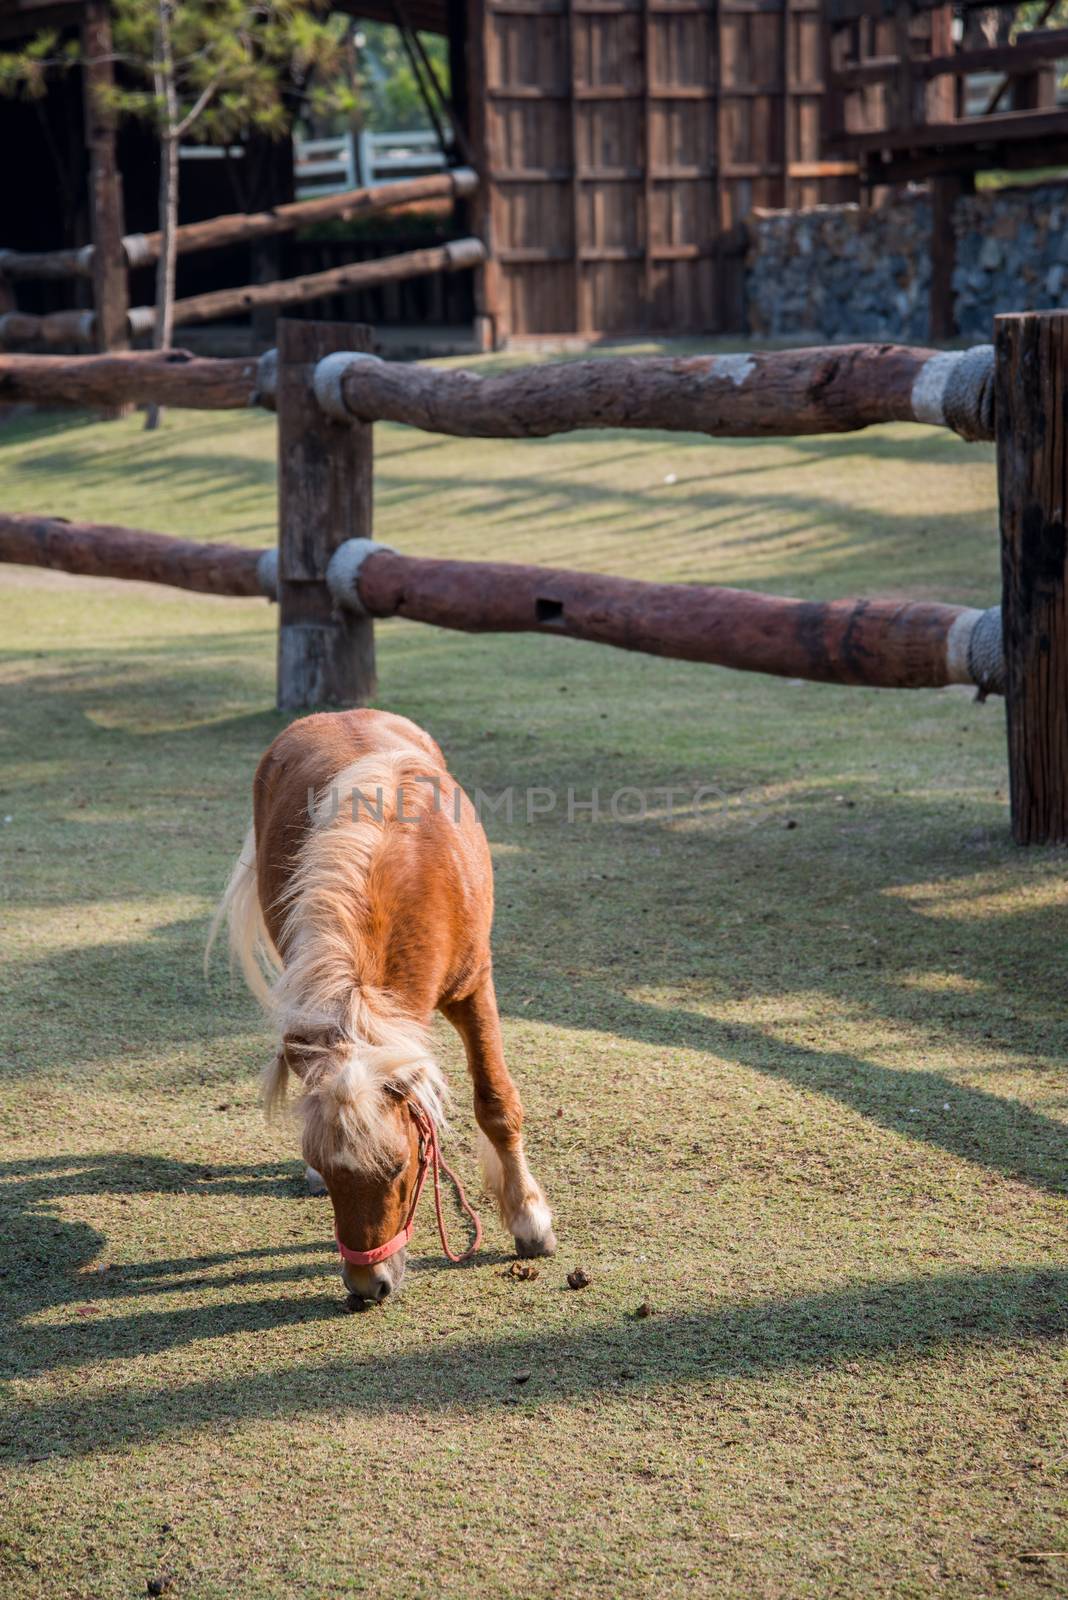 Dwarf Horse eating grass by jakgree